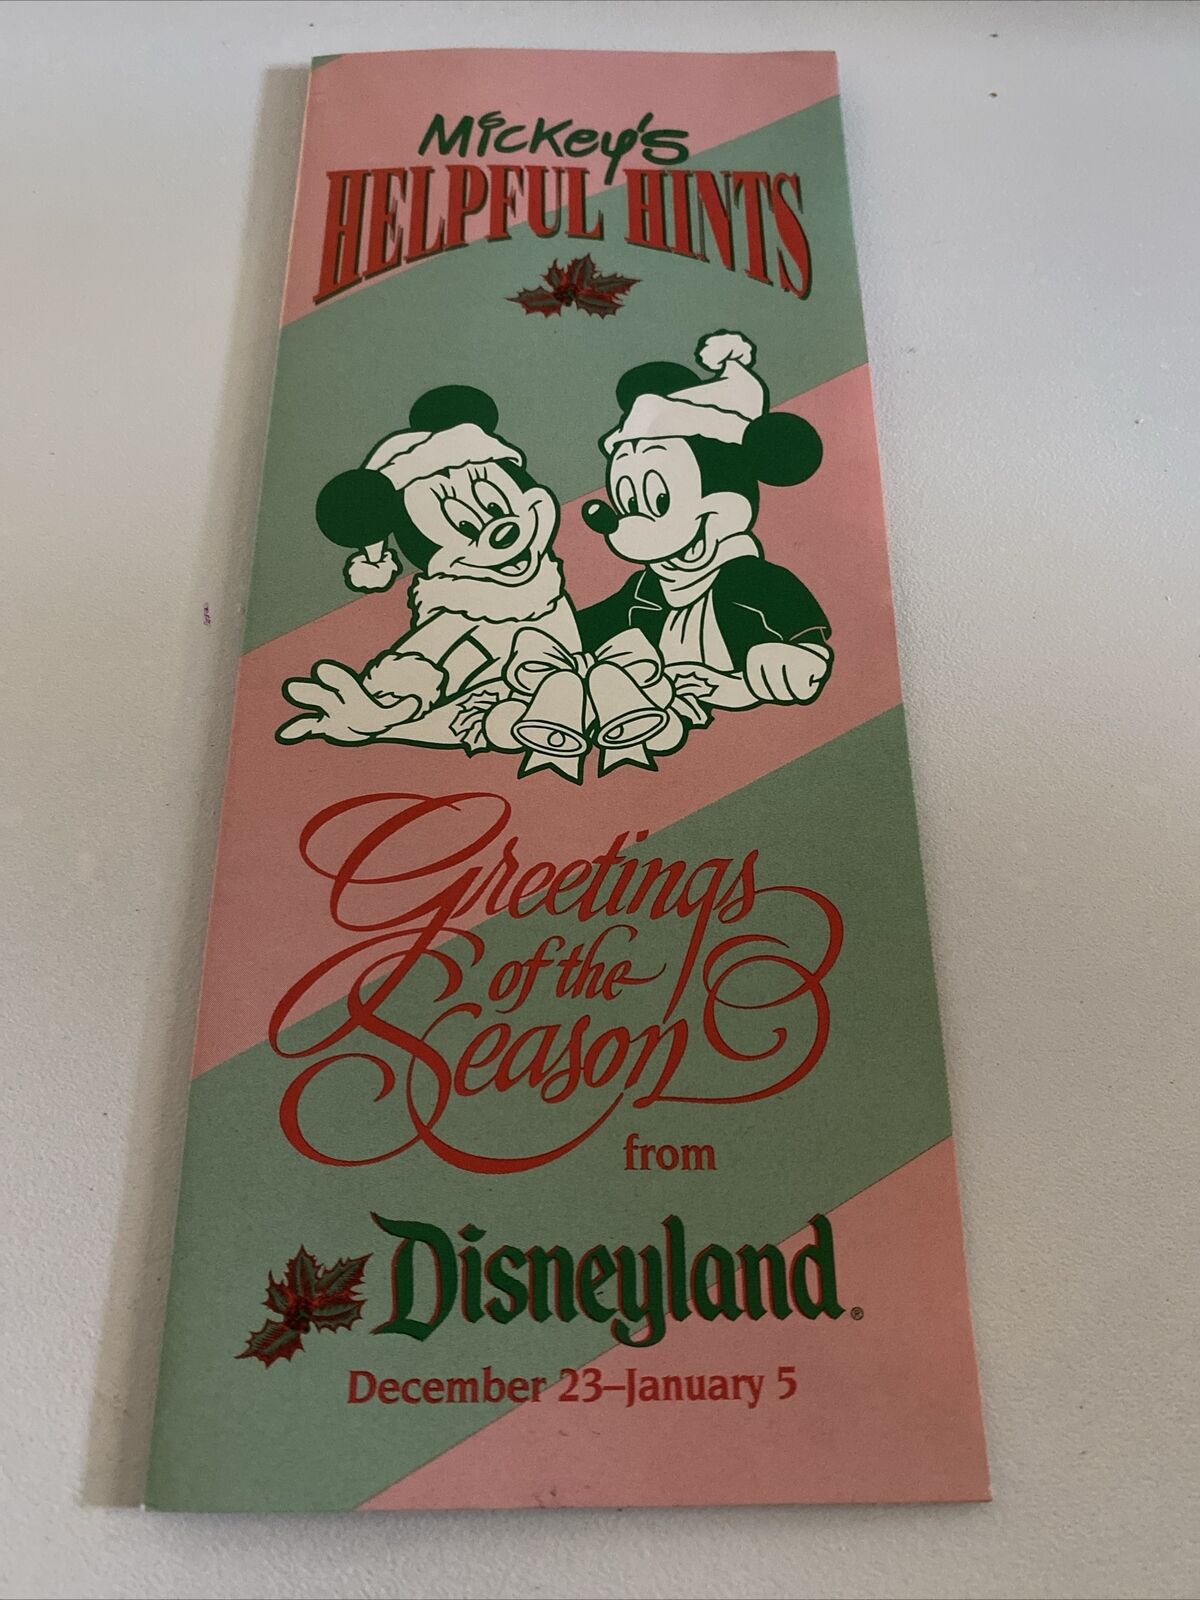 Disneyland Mickey’s Helpful Hints December 23-January 5